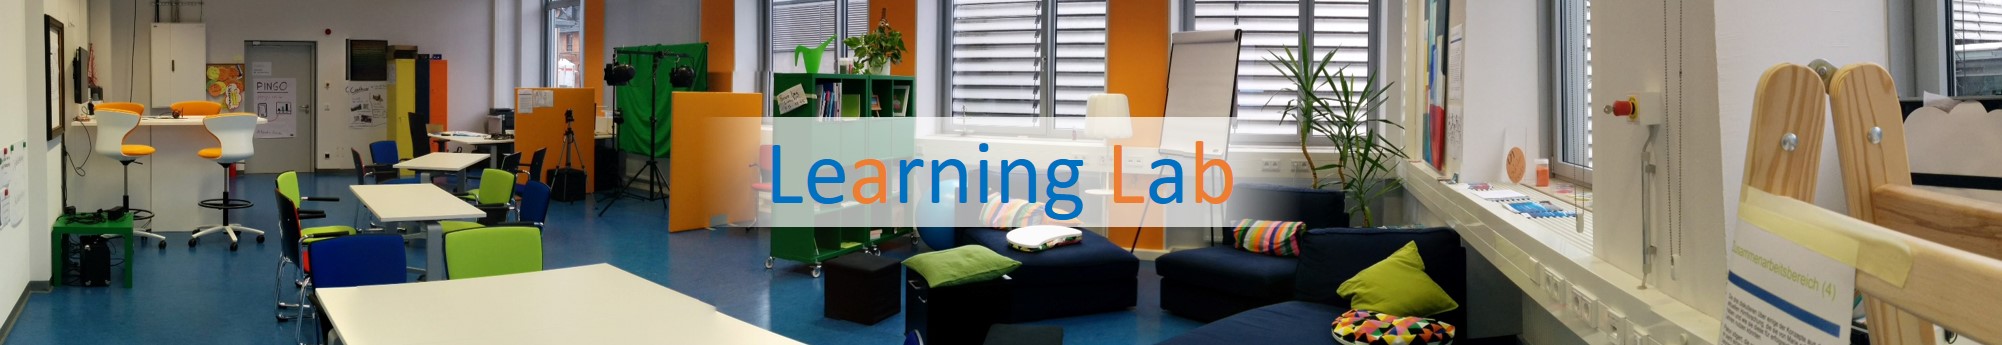 learning_lab_banner.jpg